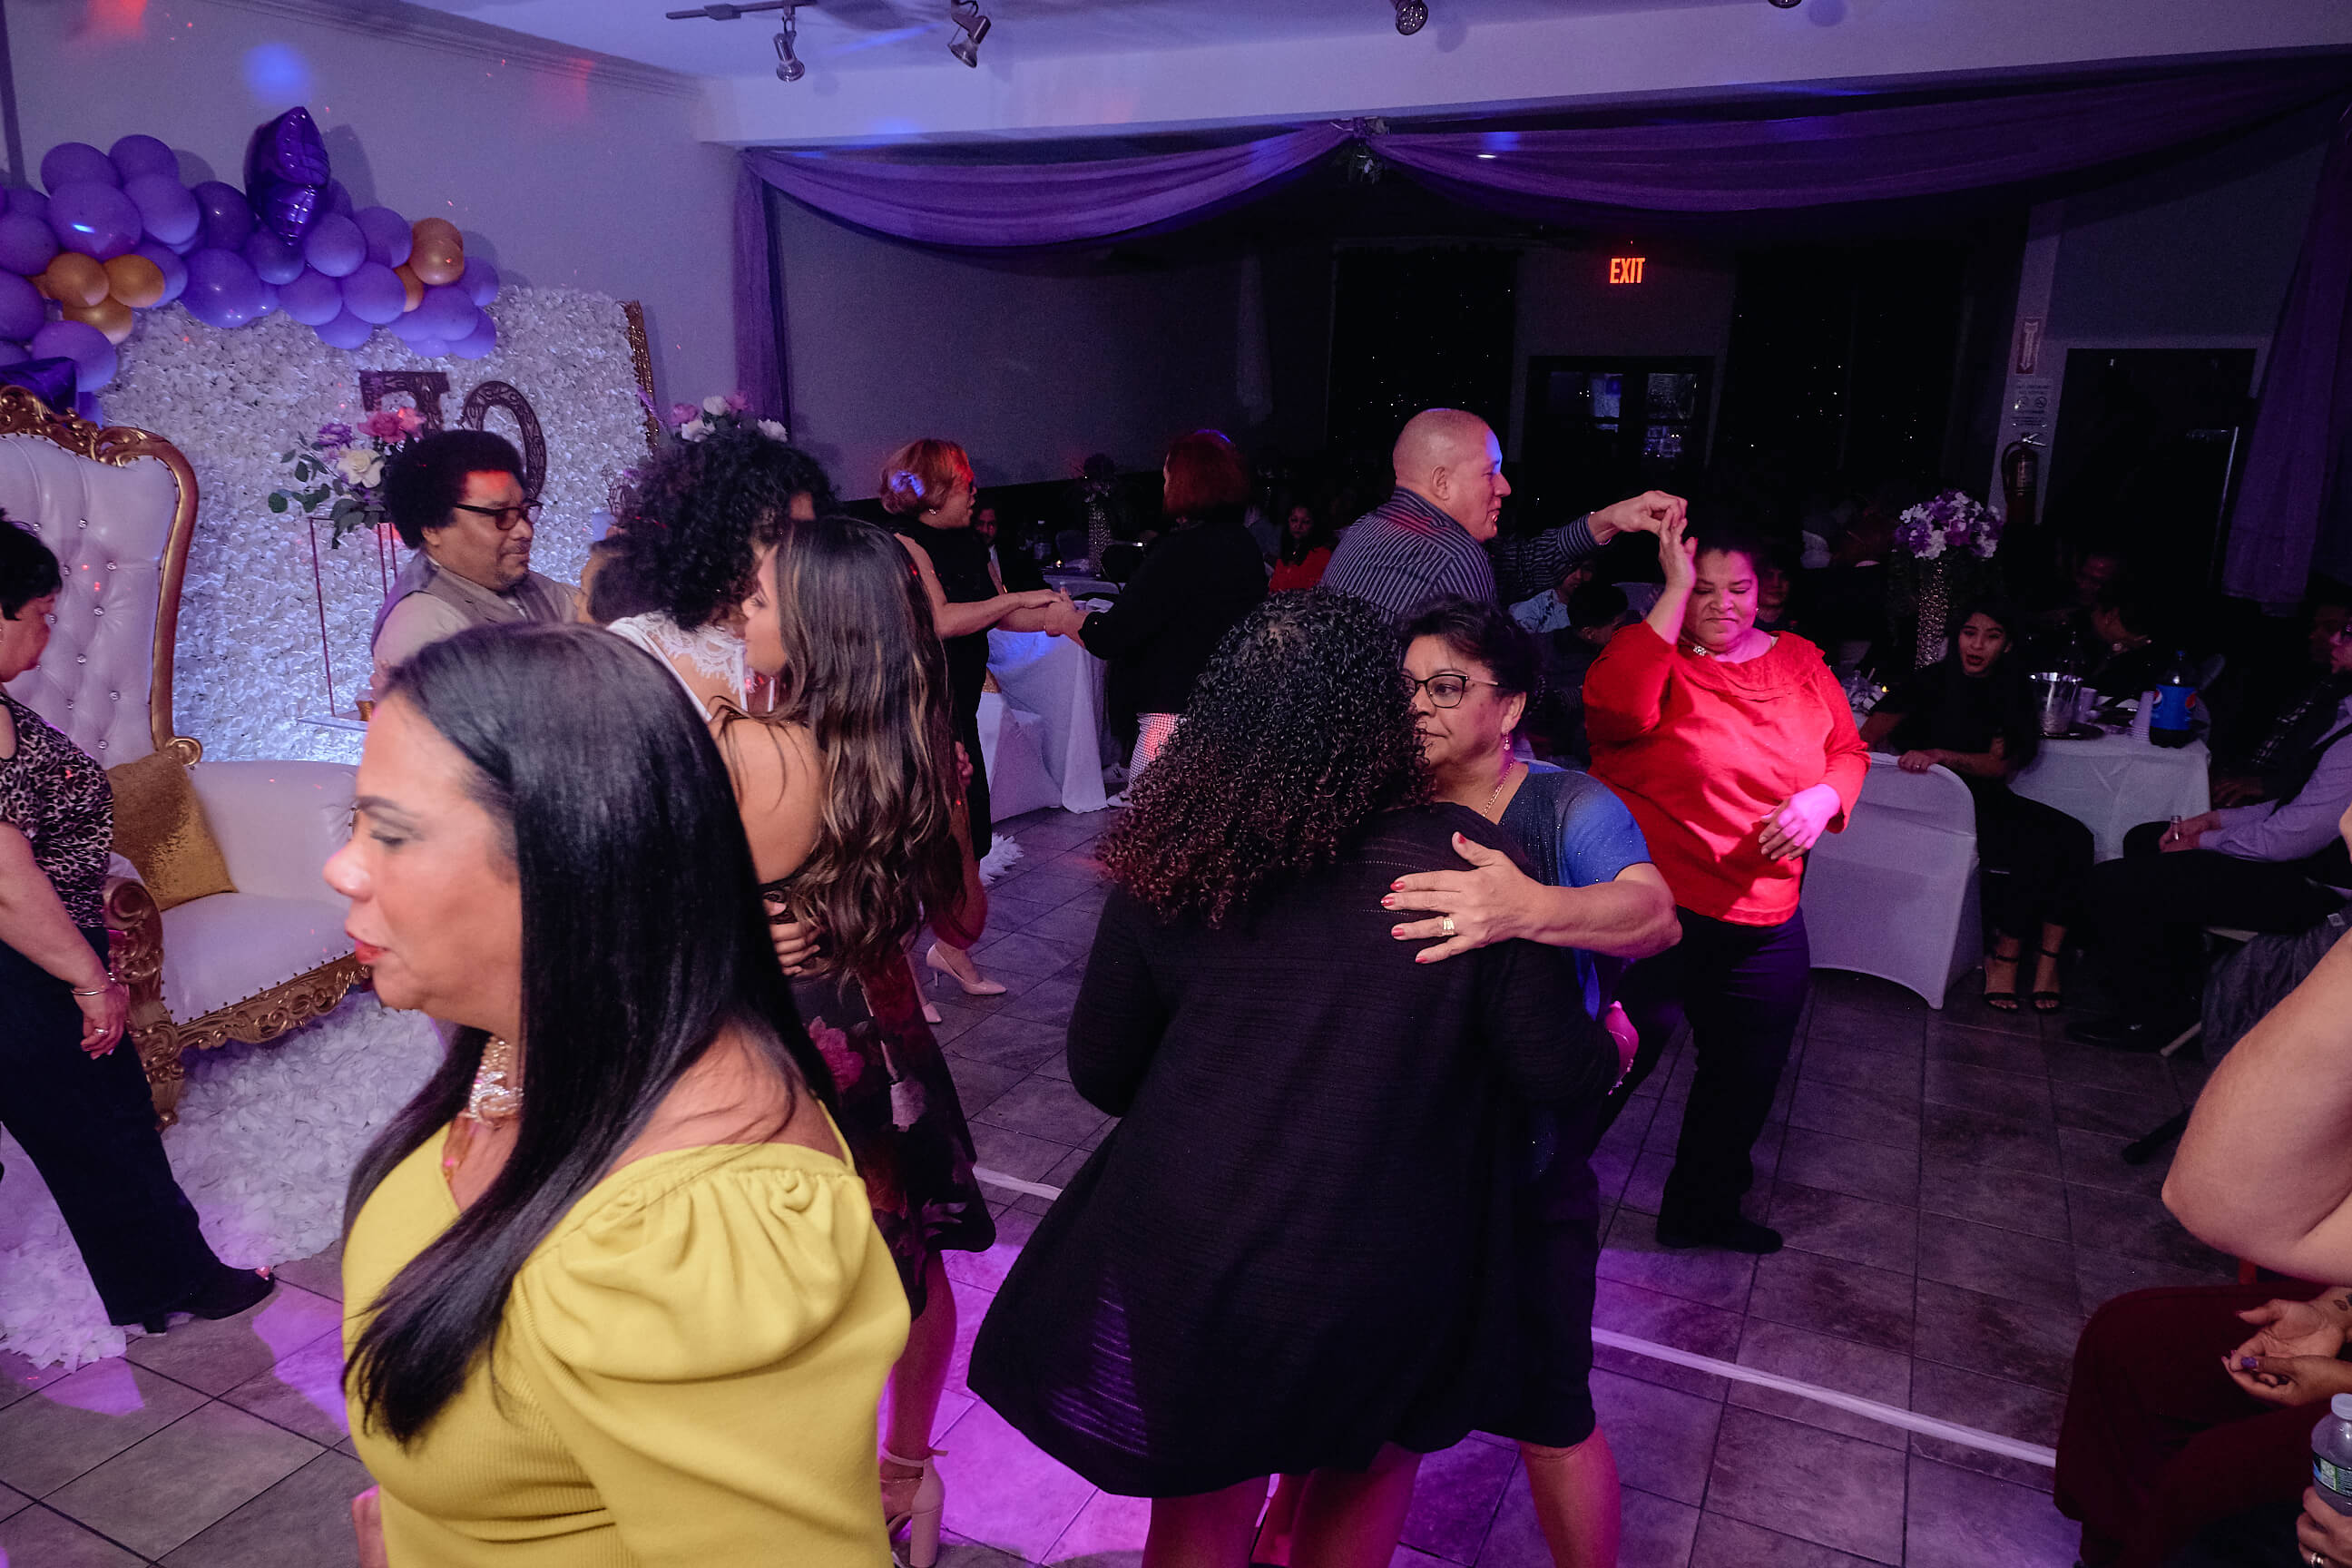 Violeta - 70th Birthday - The Venue Party Hall - Event Photography - Ridgewood, Queens New York